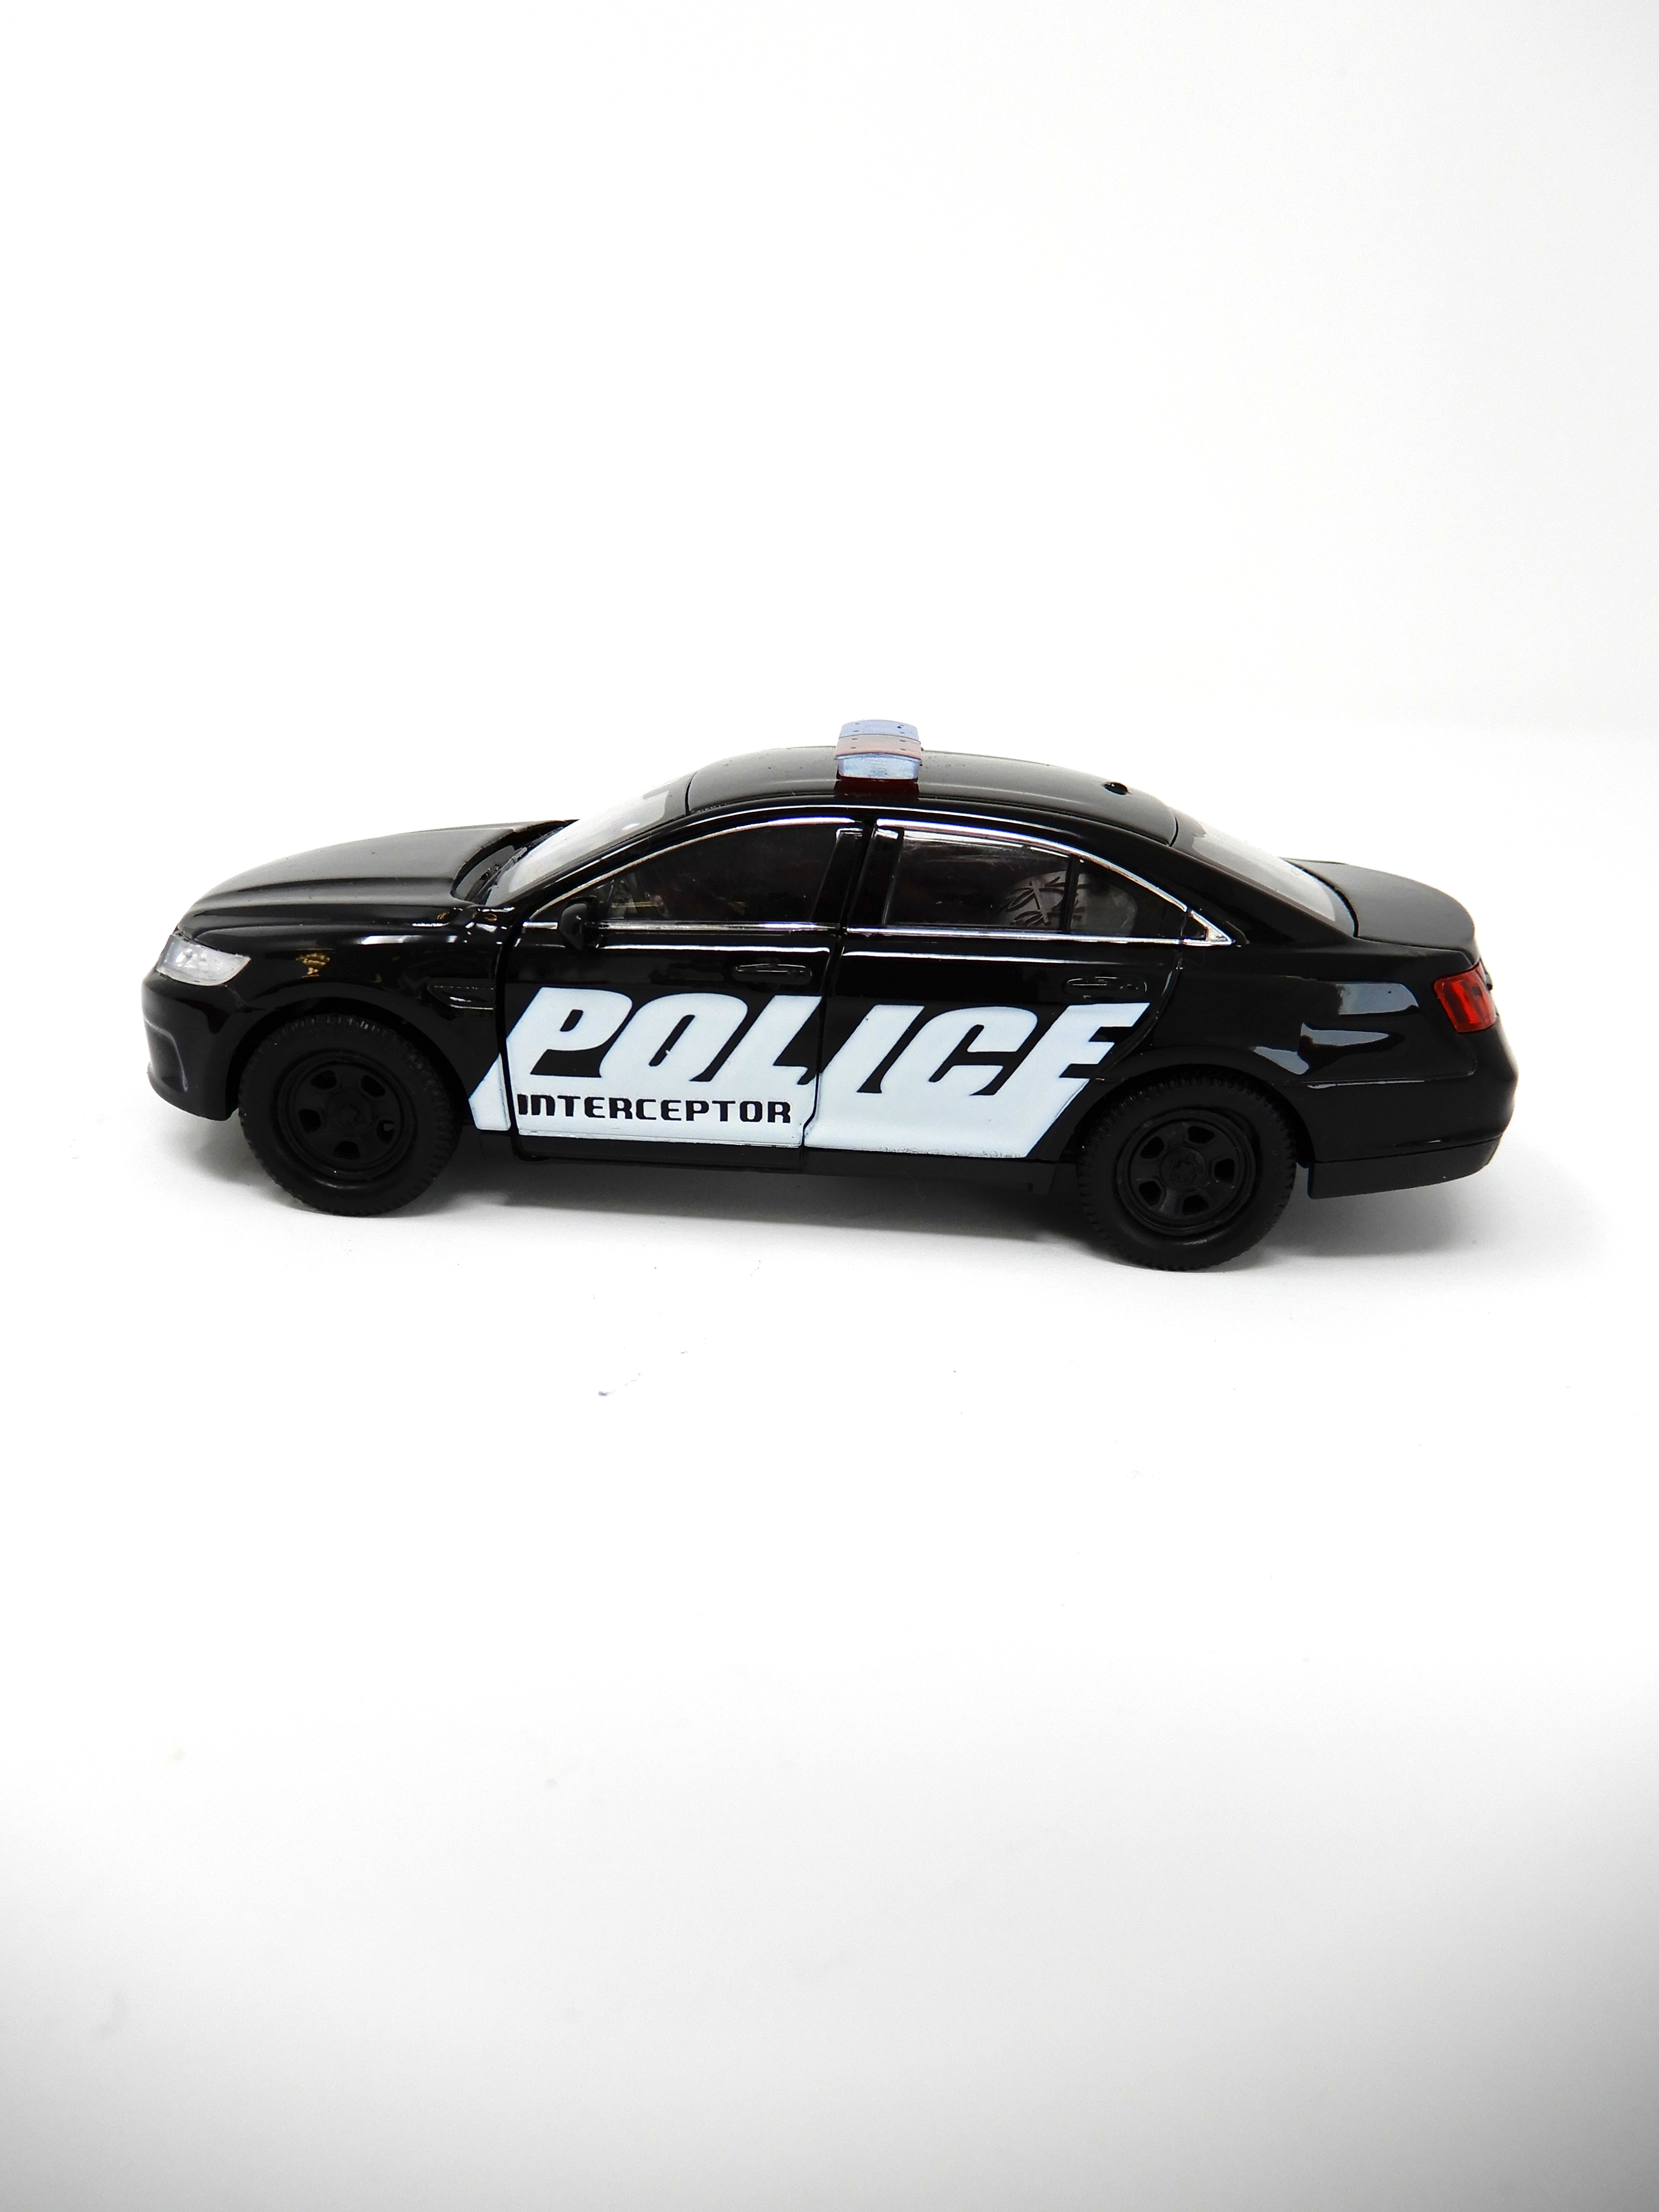 toy police car